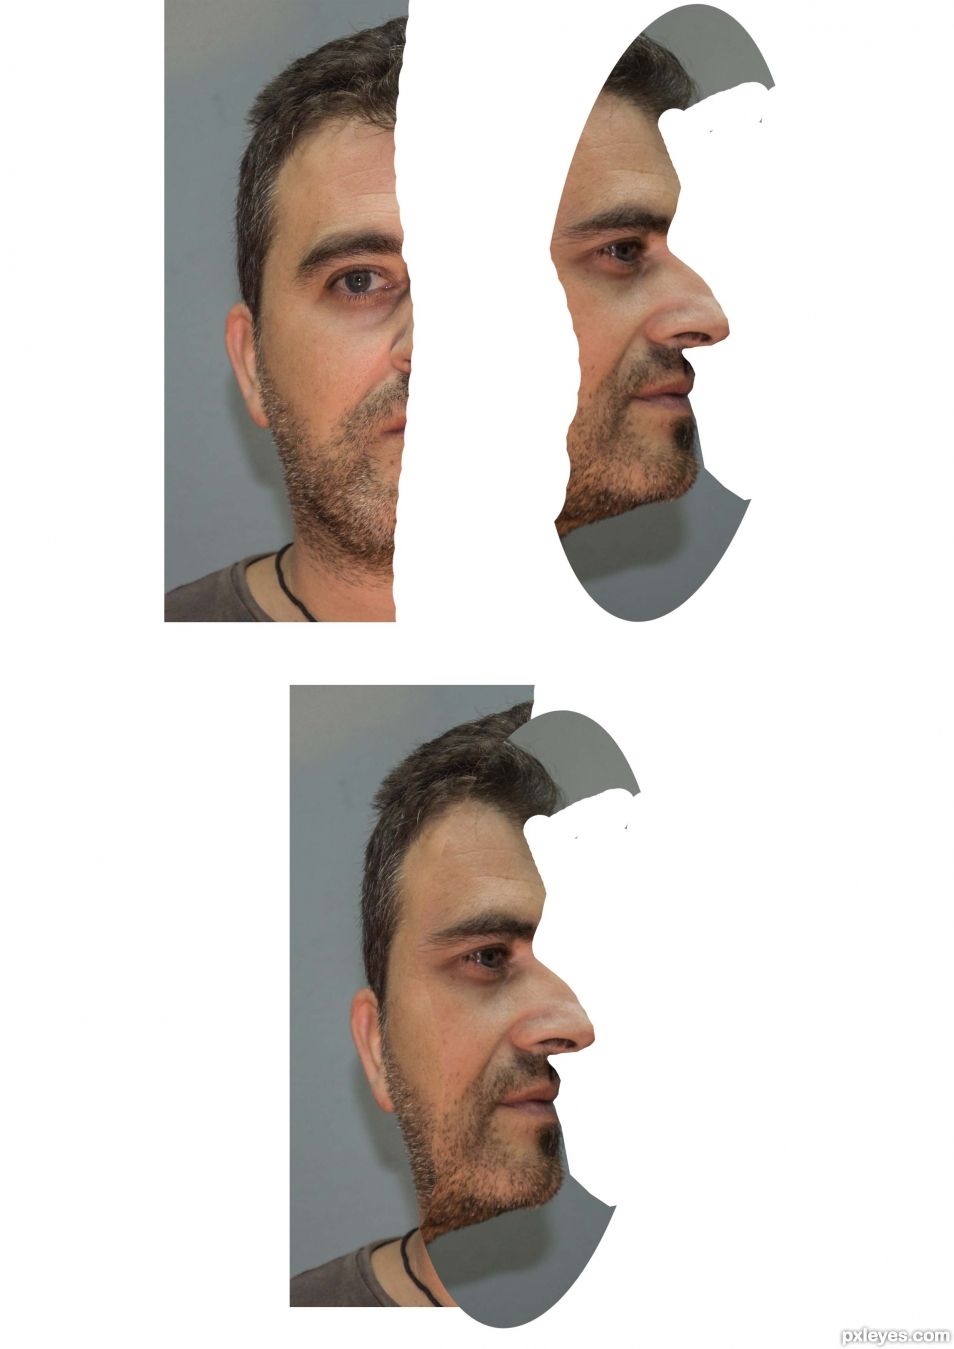 Creation of double avatar: Step 2